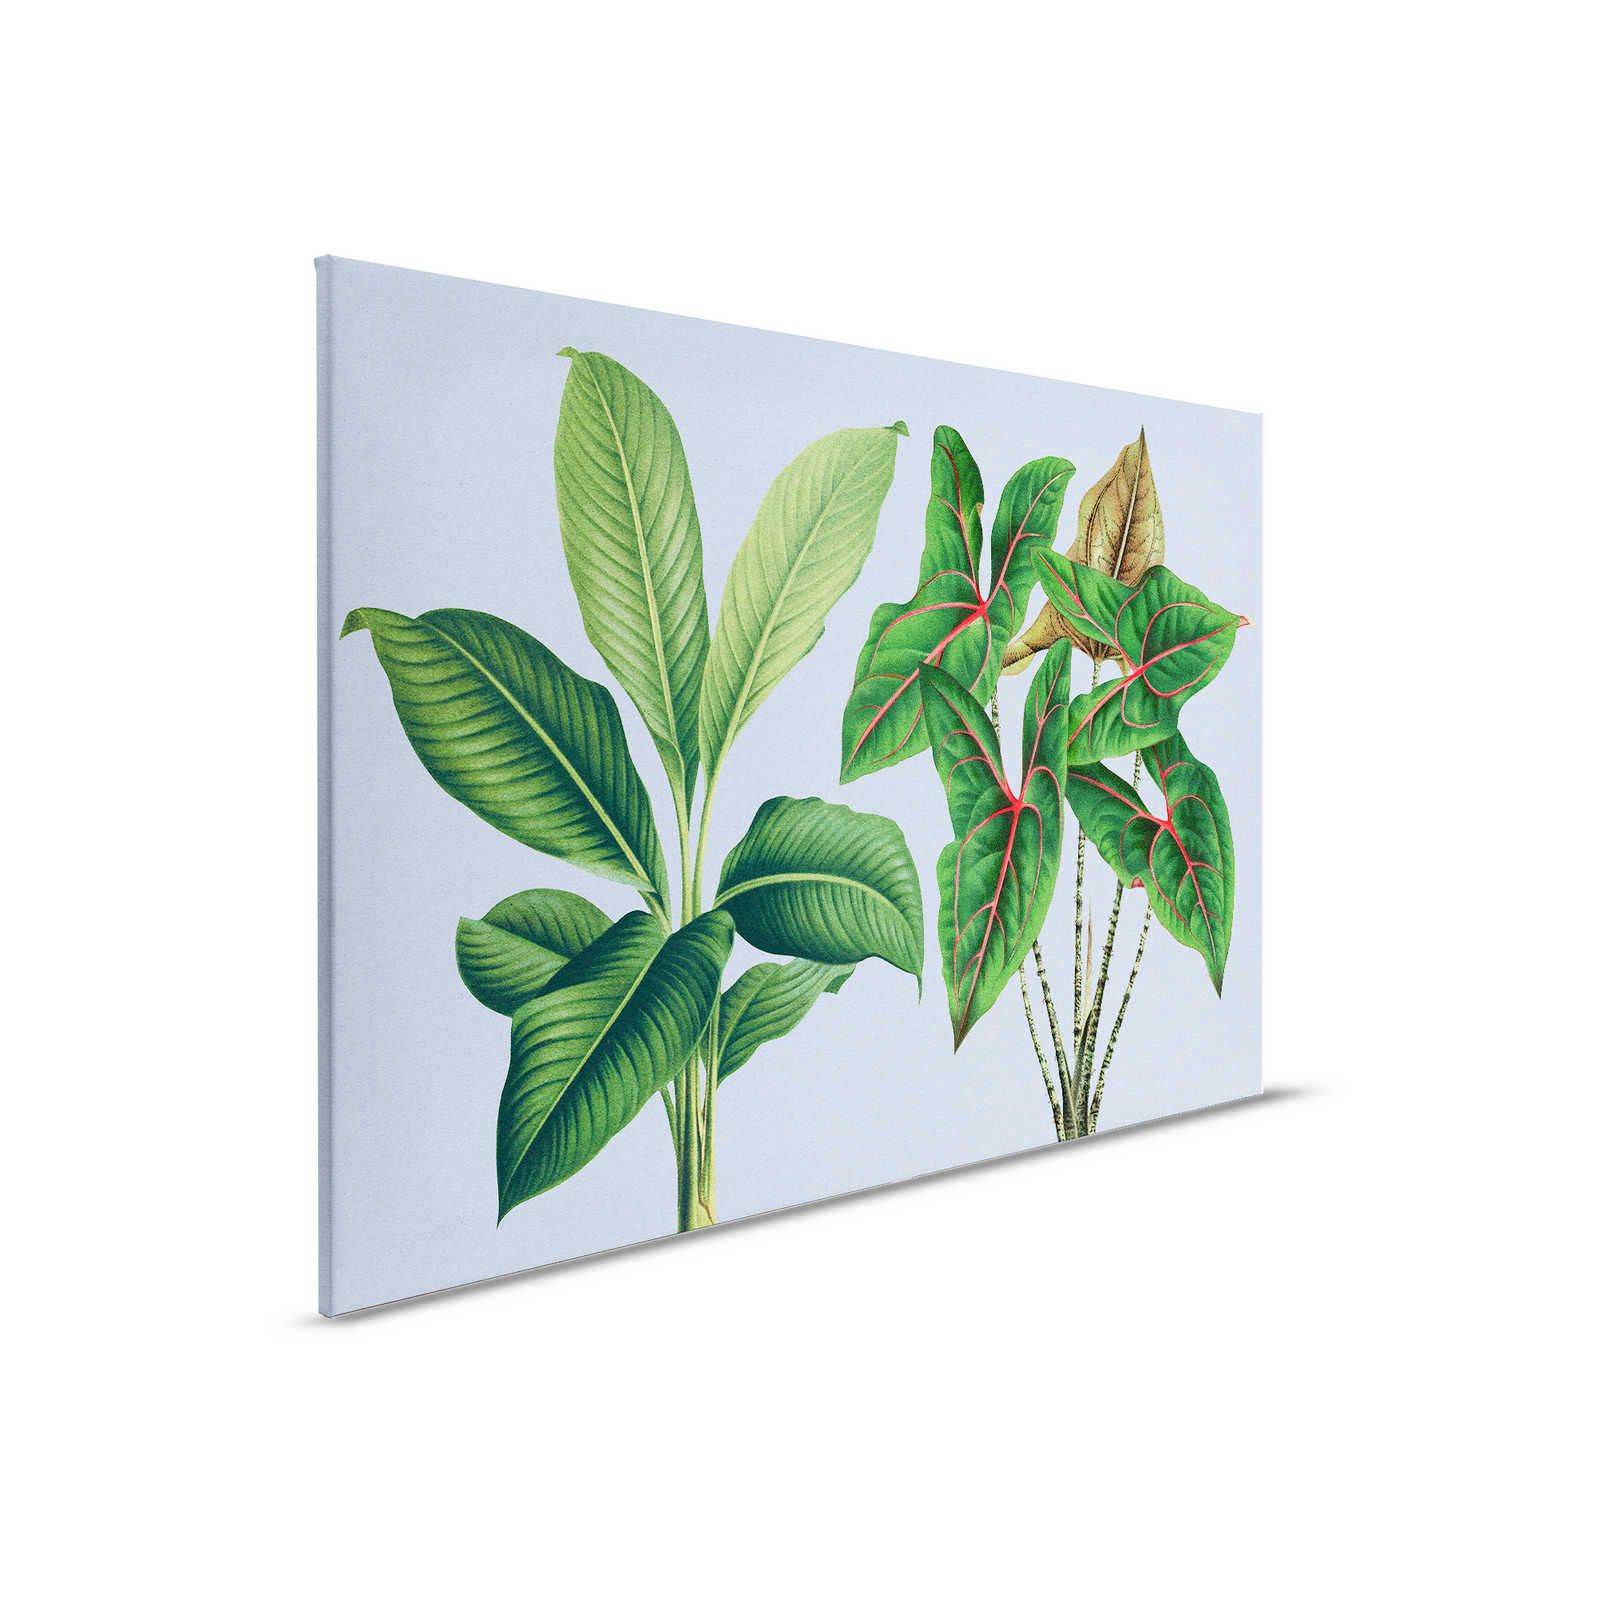 Leaf Garden 1 - Bladeren Canvas schilderij Blauw met tropische planten - 0.90 m x 0.60 m
